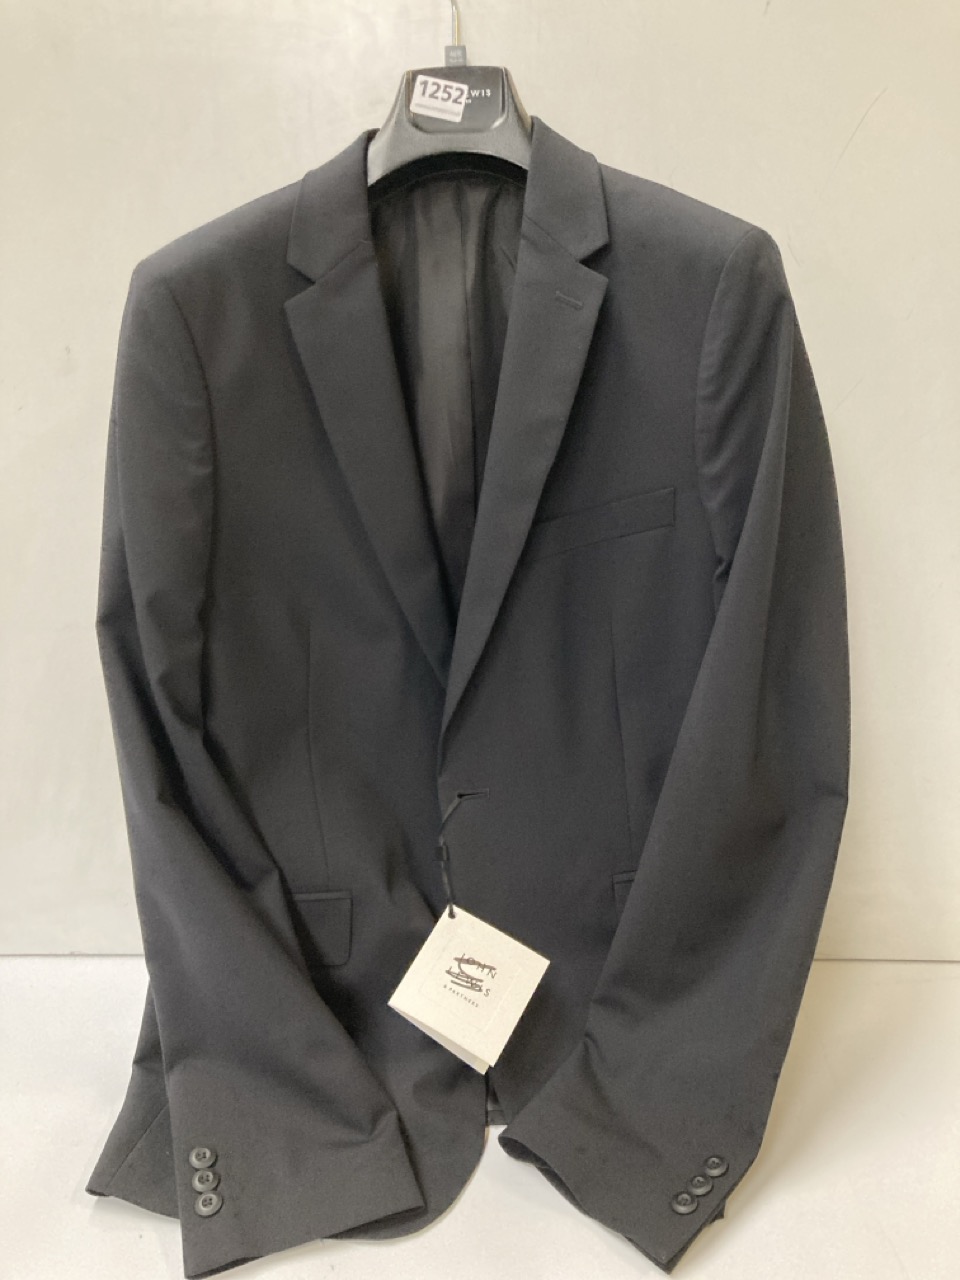 ASSORTMENT OF MEN'S CLOTHING TO INCLUDE JOHN LEWIS SLIM BLACK SUIT JACKET 40R